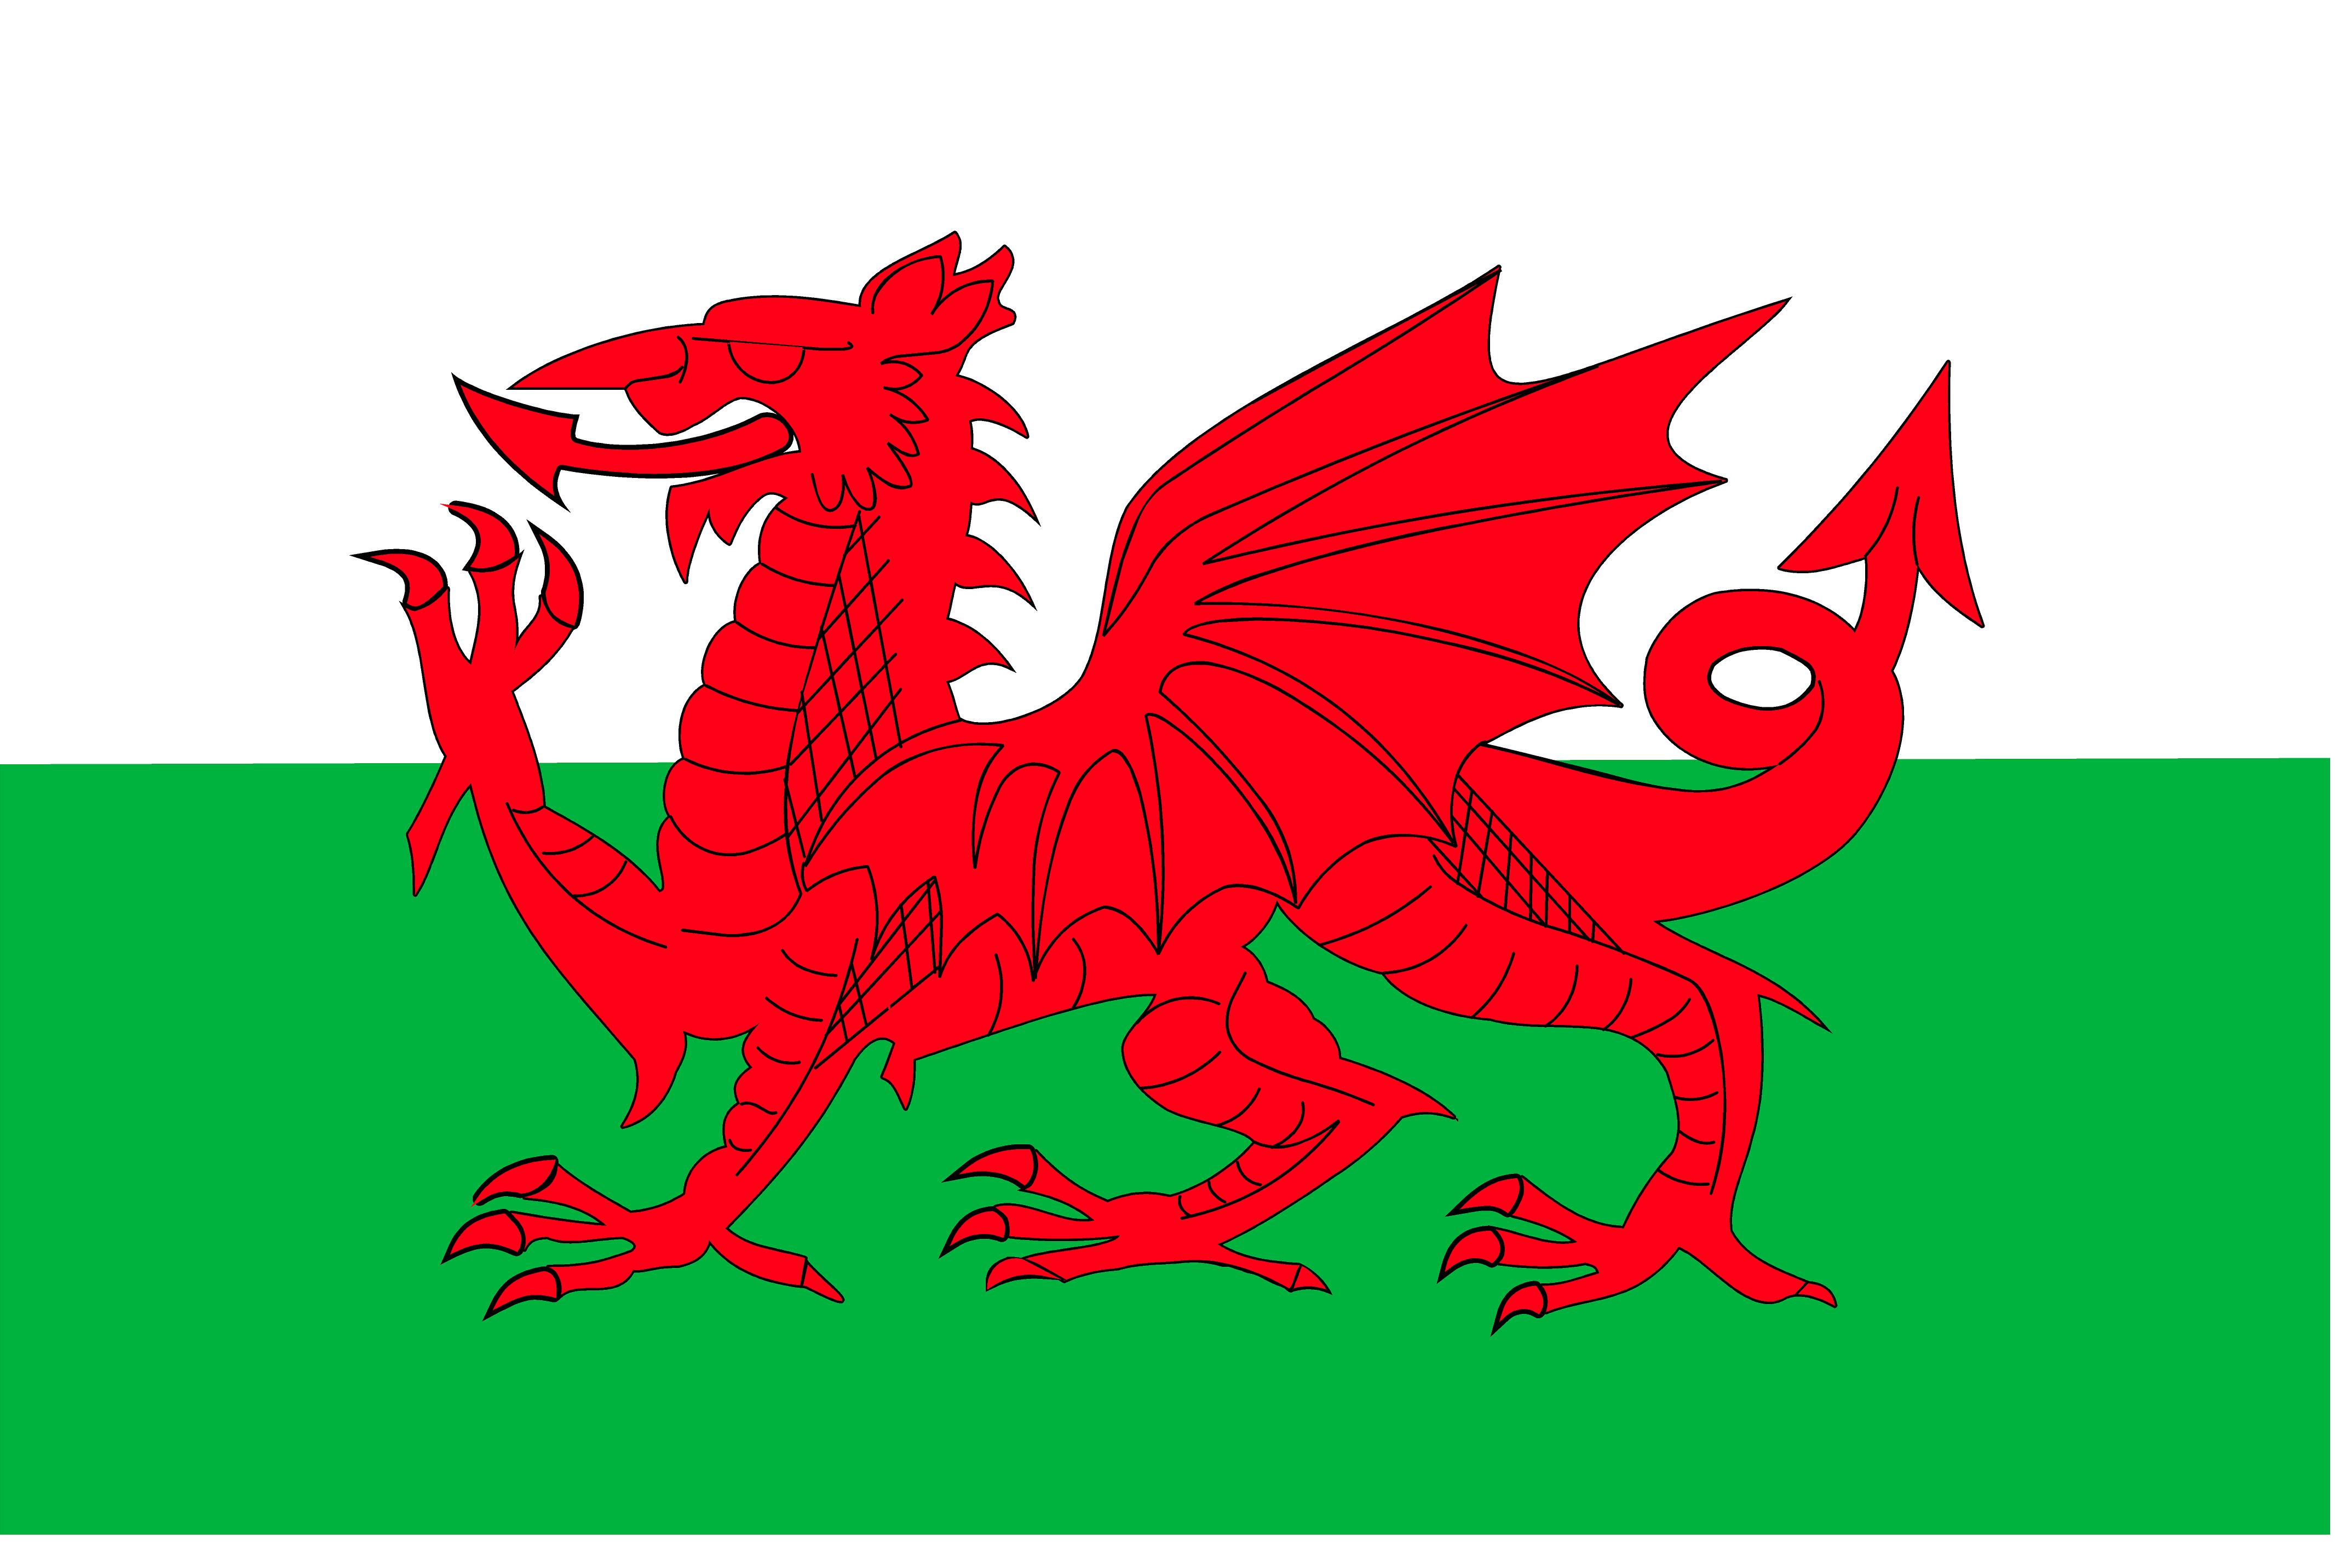 Welsh. Флаг Уэльса. Уэльс флаг и герб. Флаг Уэльса 1807 год. Флаг валлийцев.